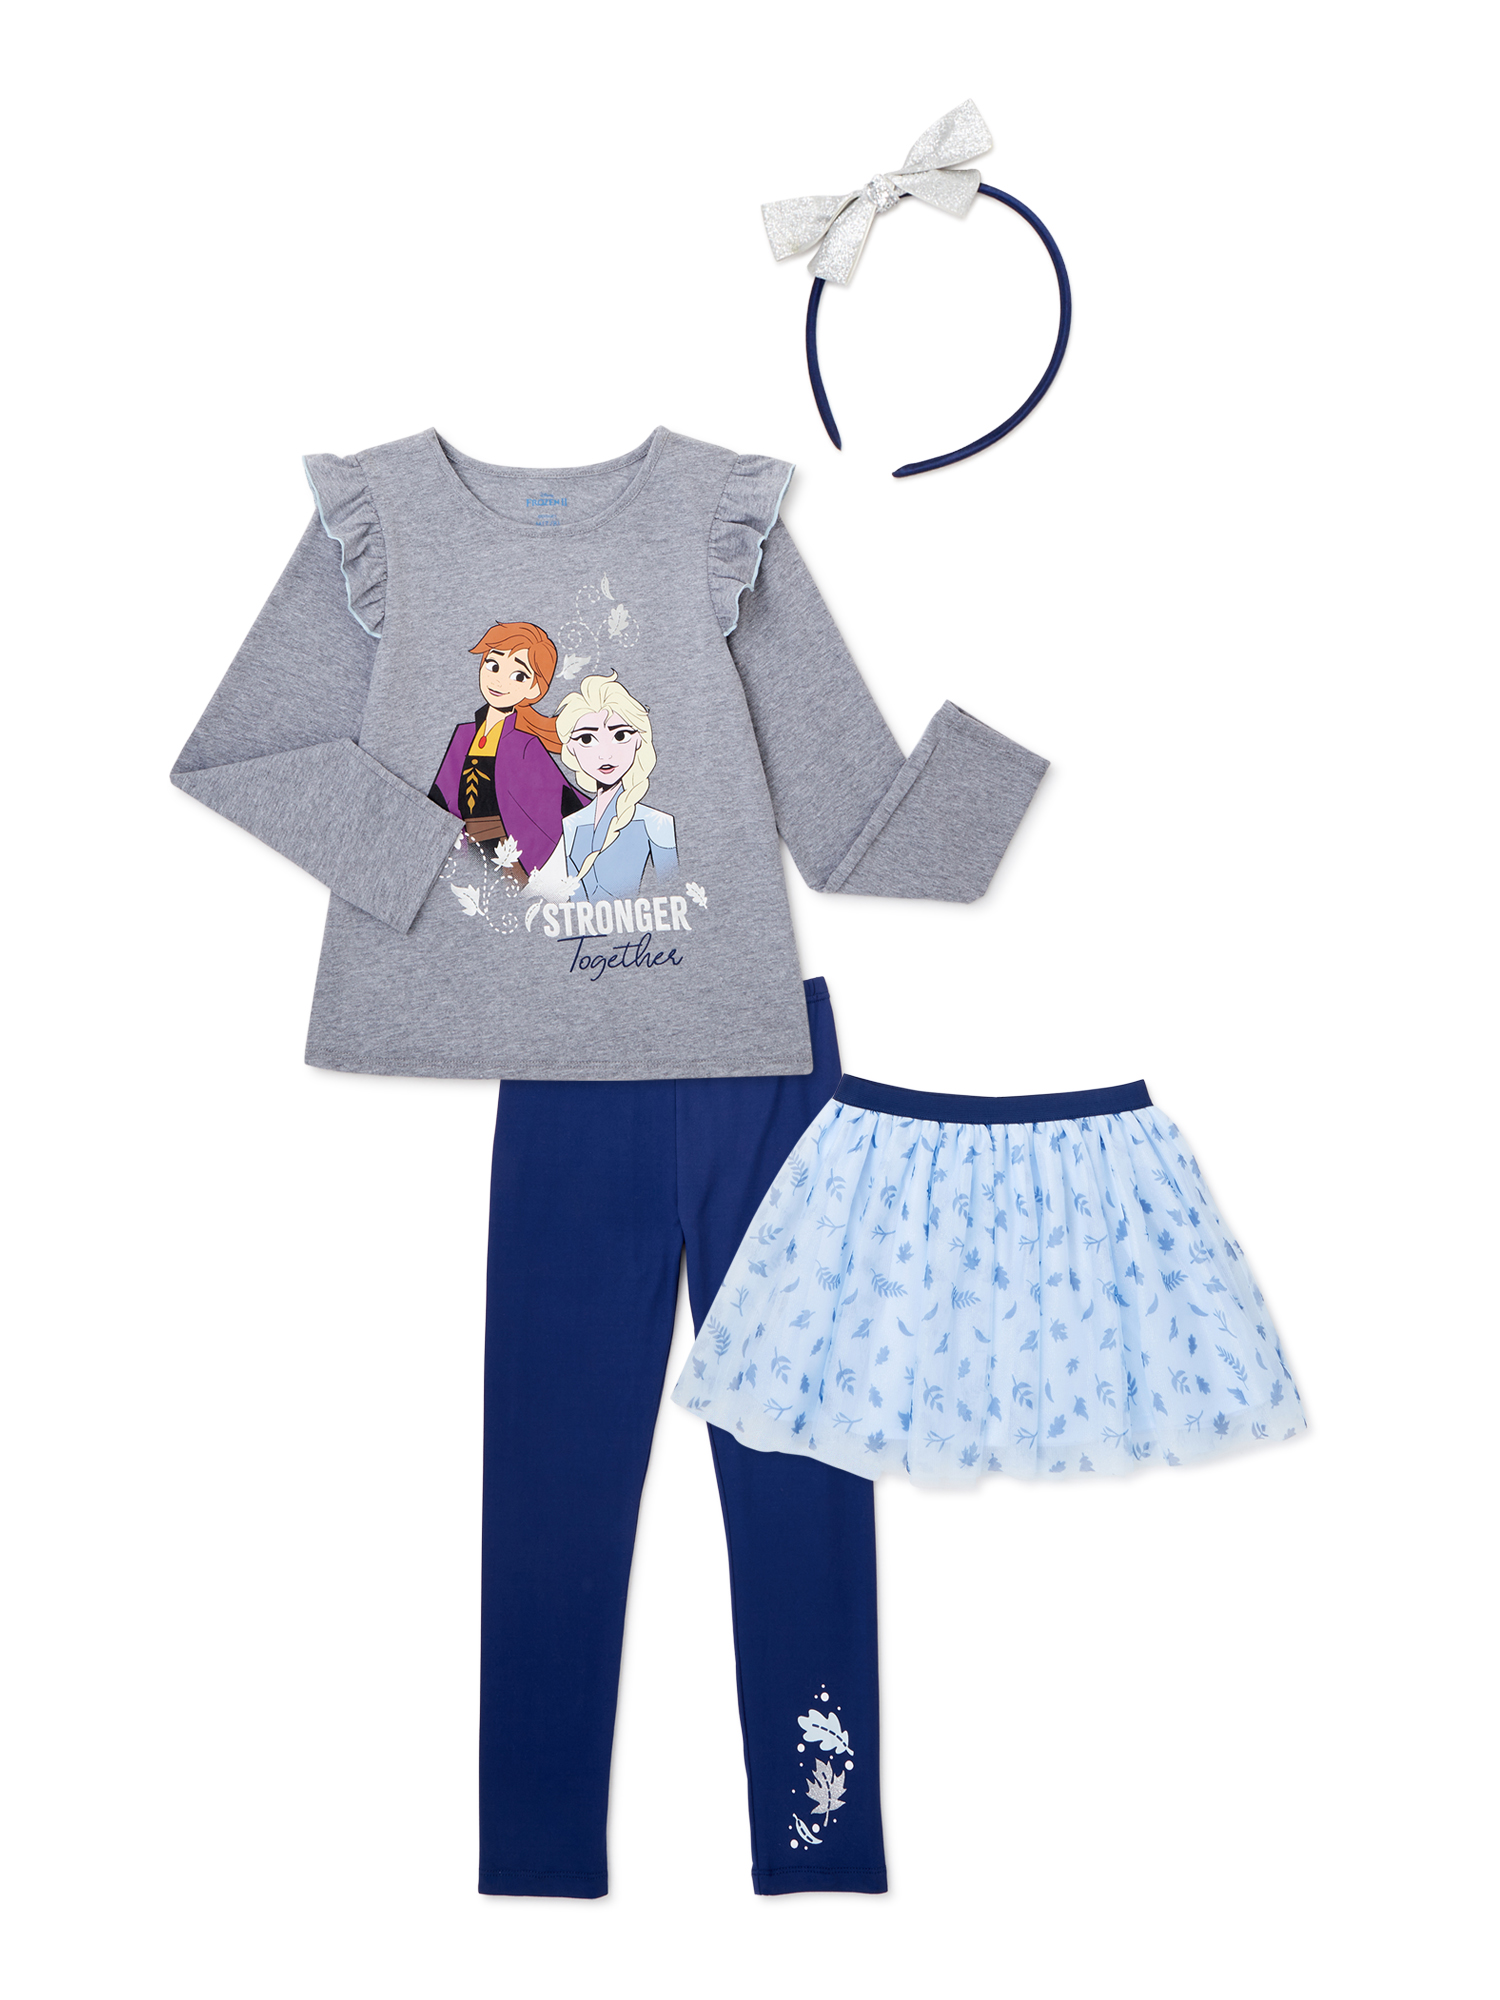 Frozen 2 Anna & Elsa Toddler Girl Long Sleeve Top, Tutu Skirt, Leggings & Headband, 4pc outfit set - image 1 of 3